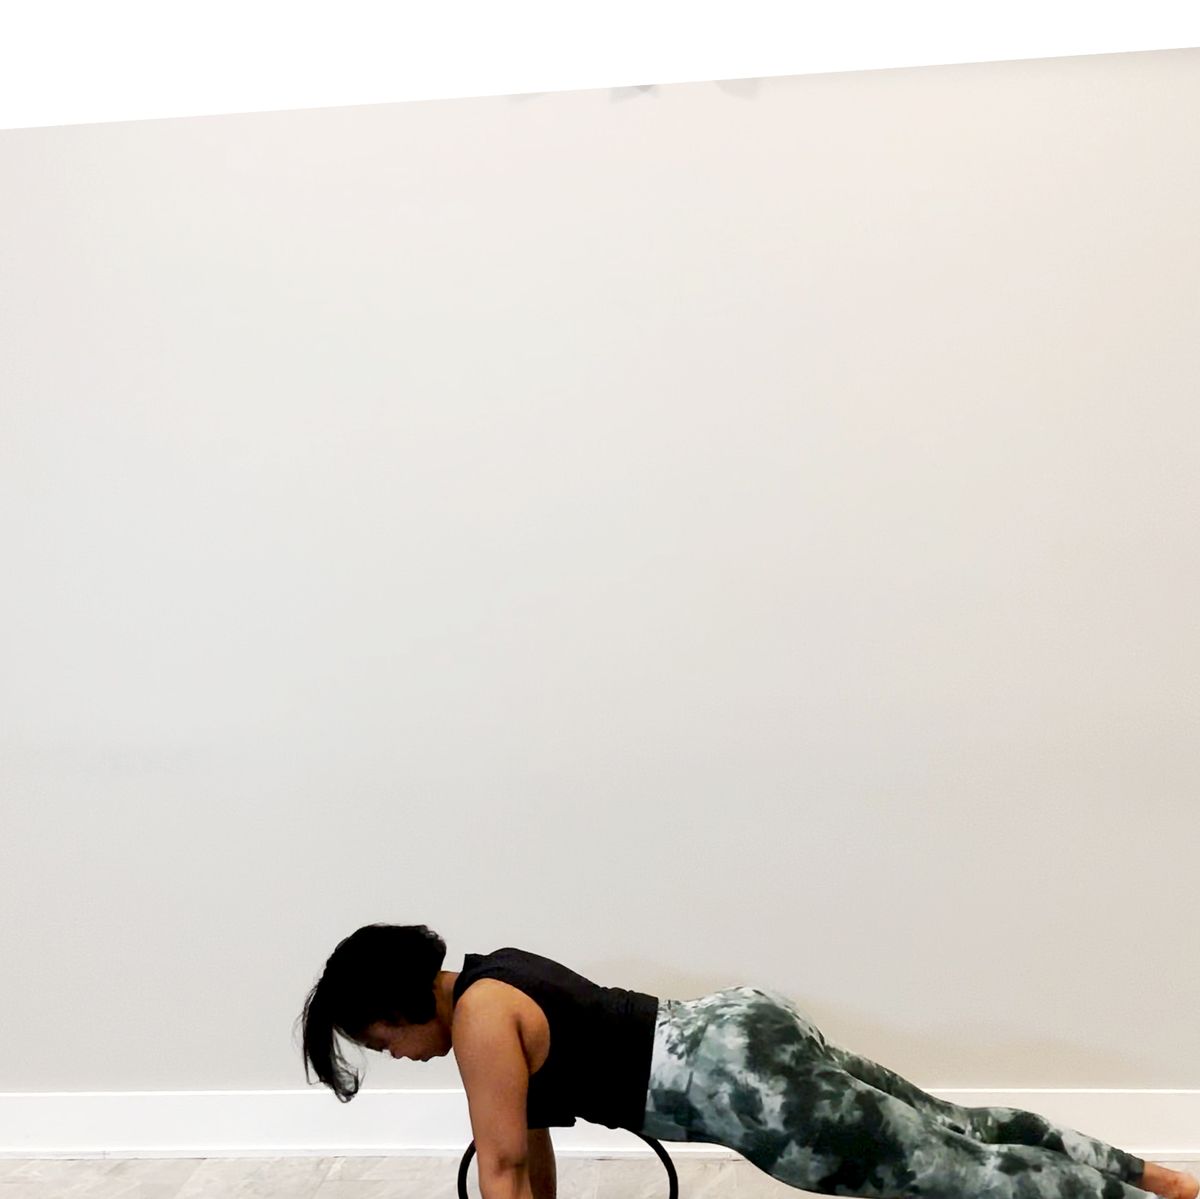 Pilates Ring Toning Inner Thigh Yoga Exercise Circle Body Building